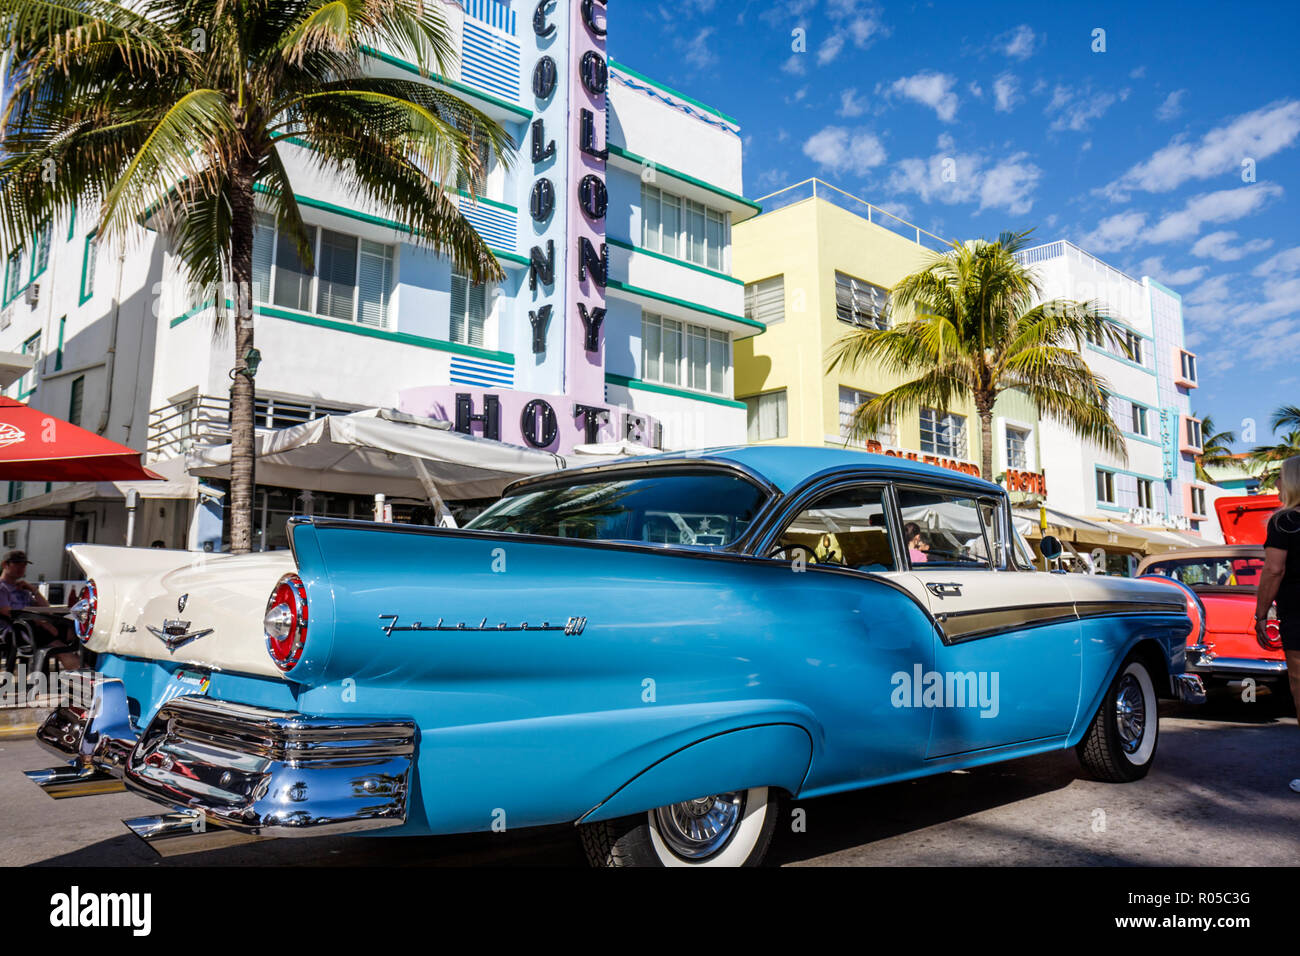 Miami Beach Florida,Ocean Drive,Art Deco Weekend,architecture,architectural,festival,event,celebration,classic car cars,exhibit exhibition collection, Stock Photo